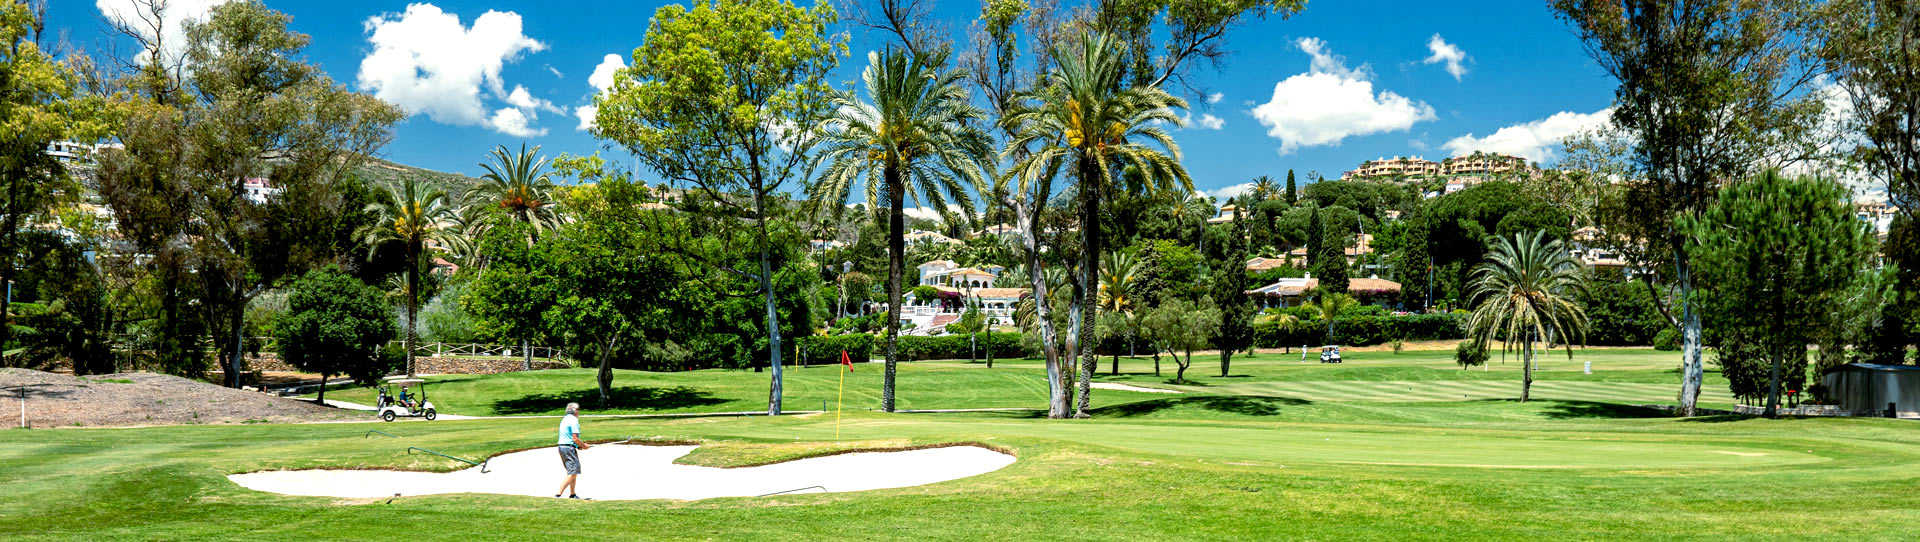 Spain golf courses - El Paraiso Golf - Photo 3